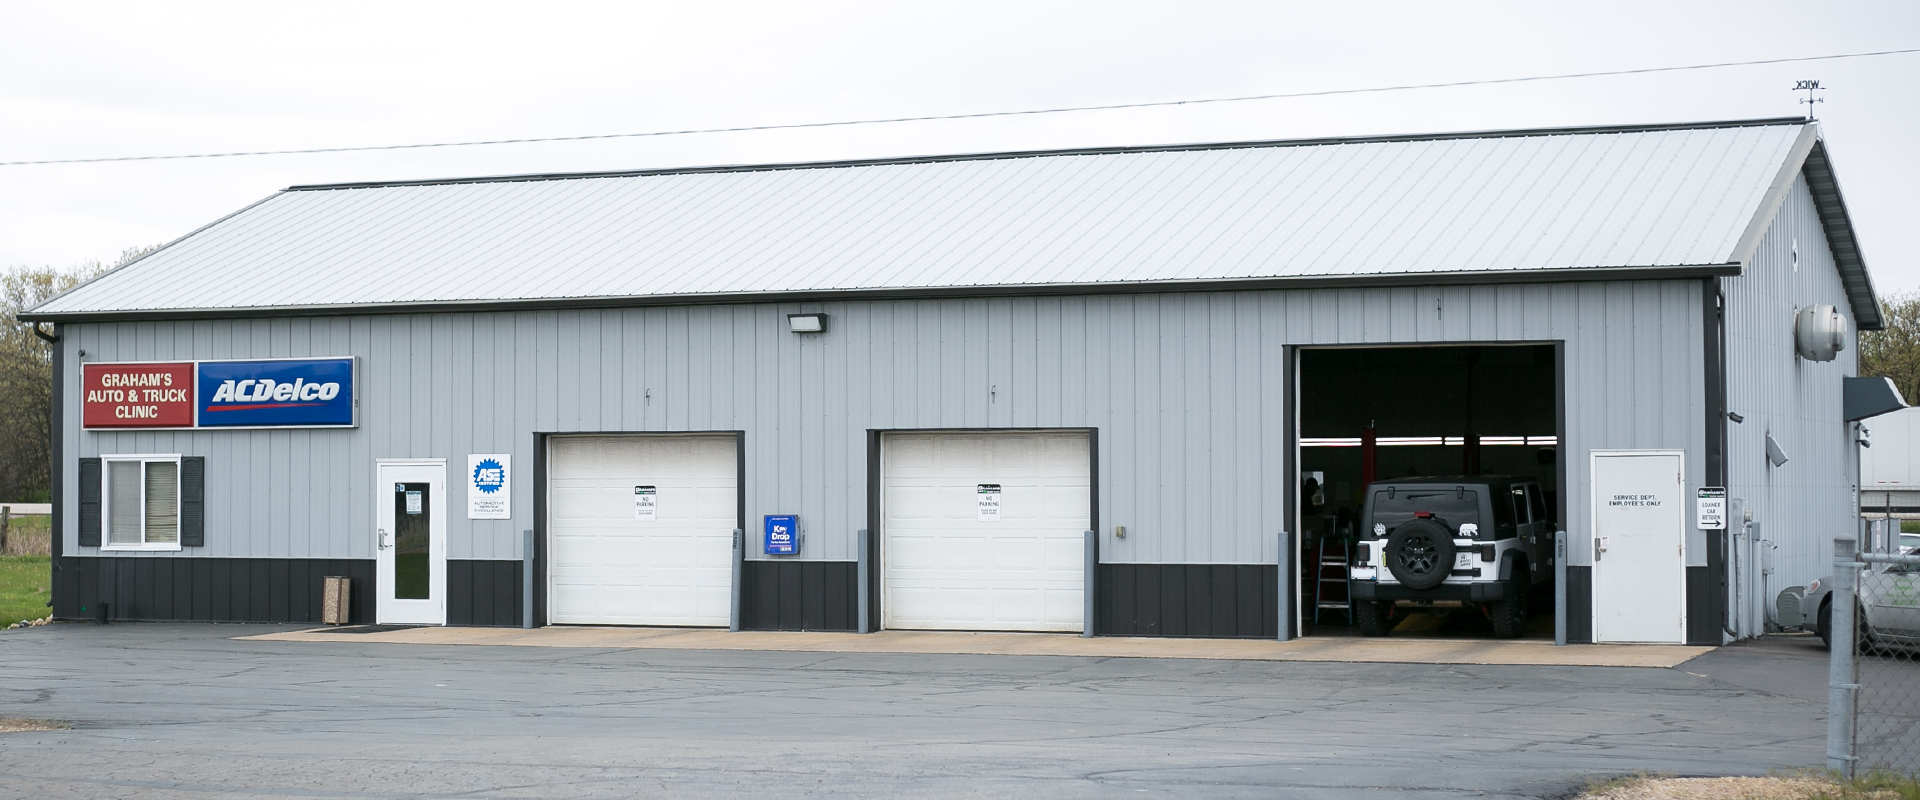 Poynette Location | Grahams Auto & Truck Clinic